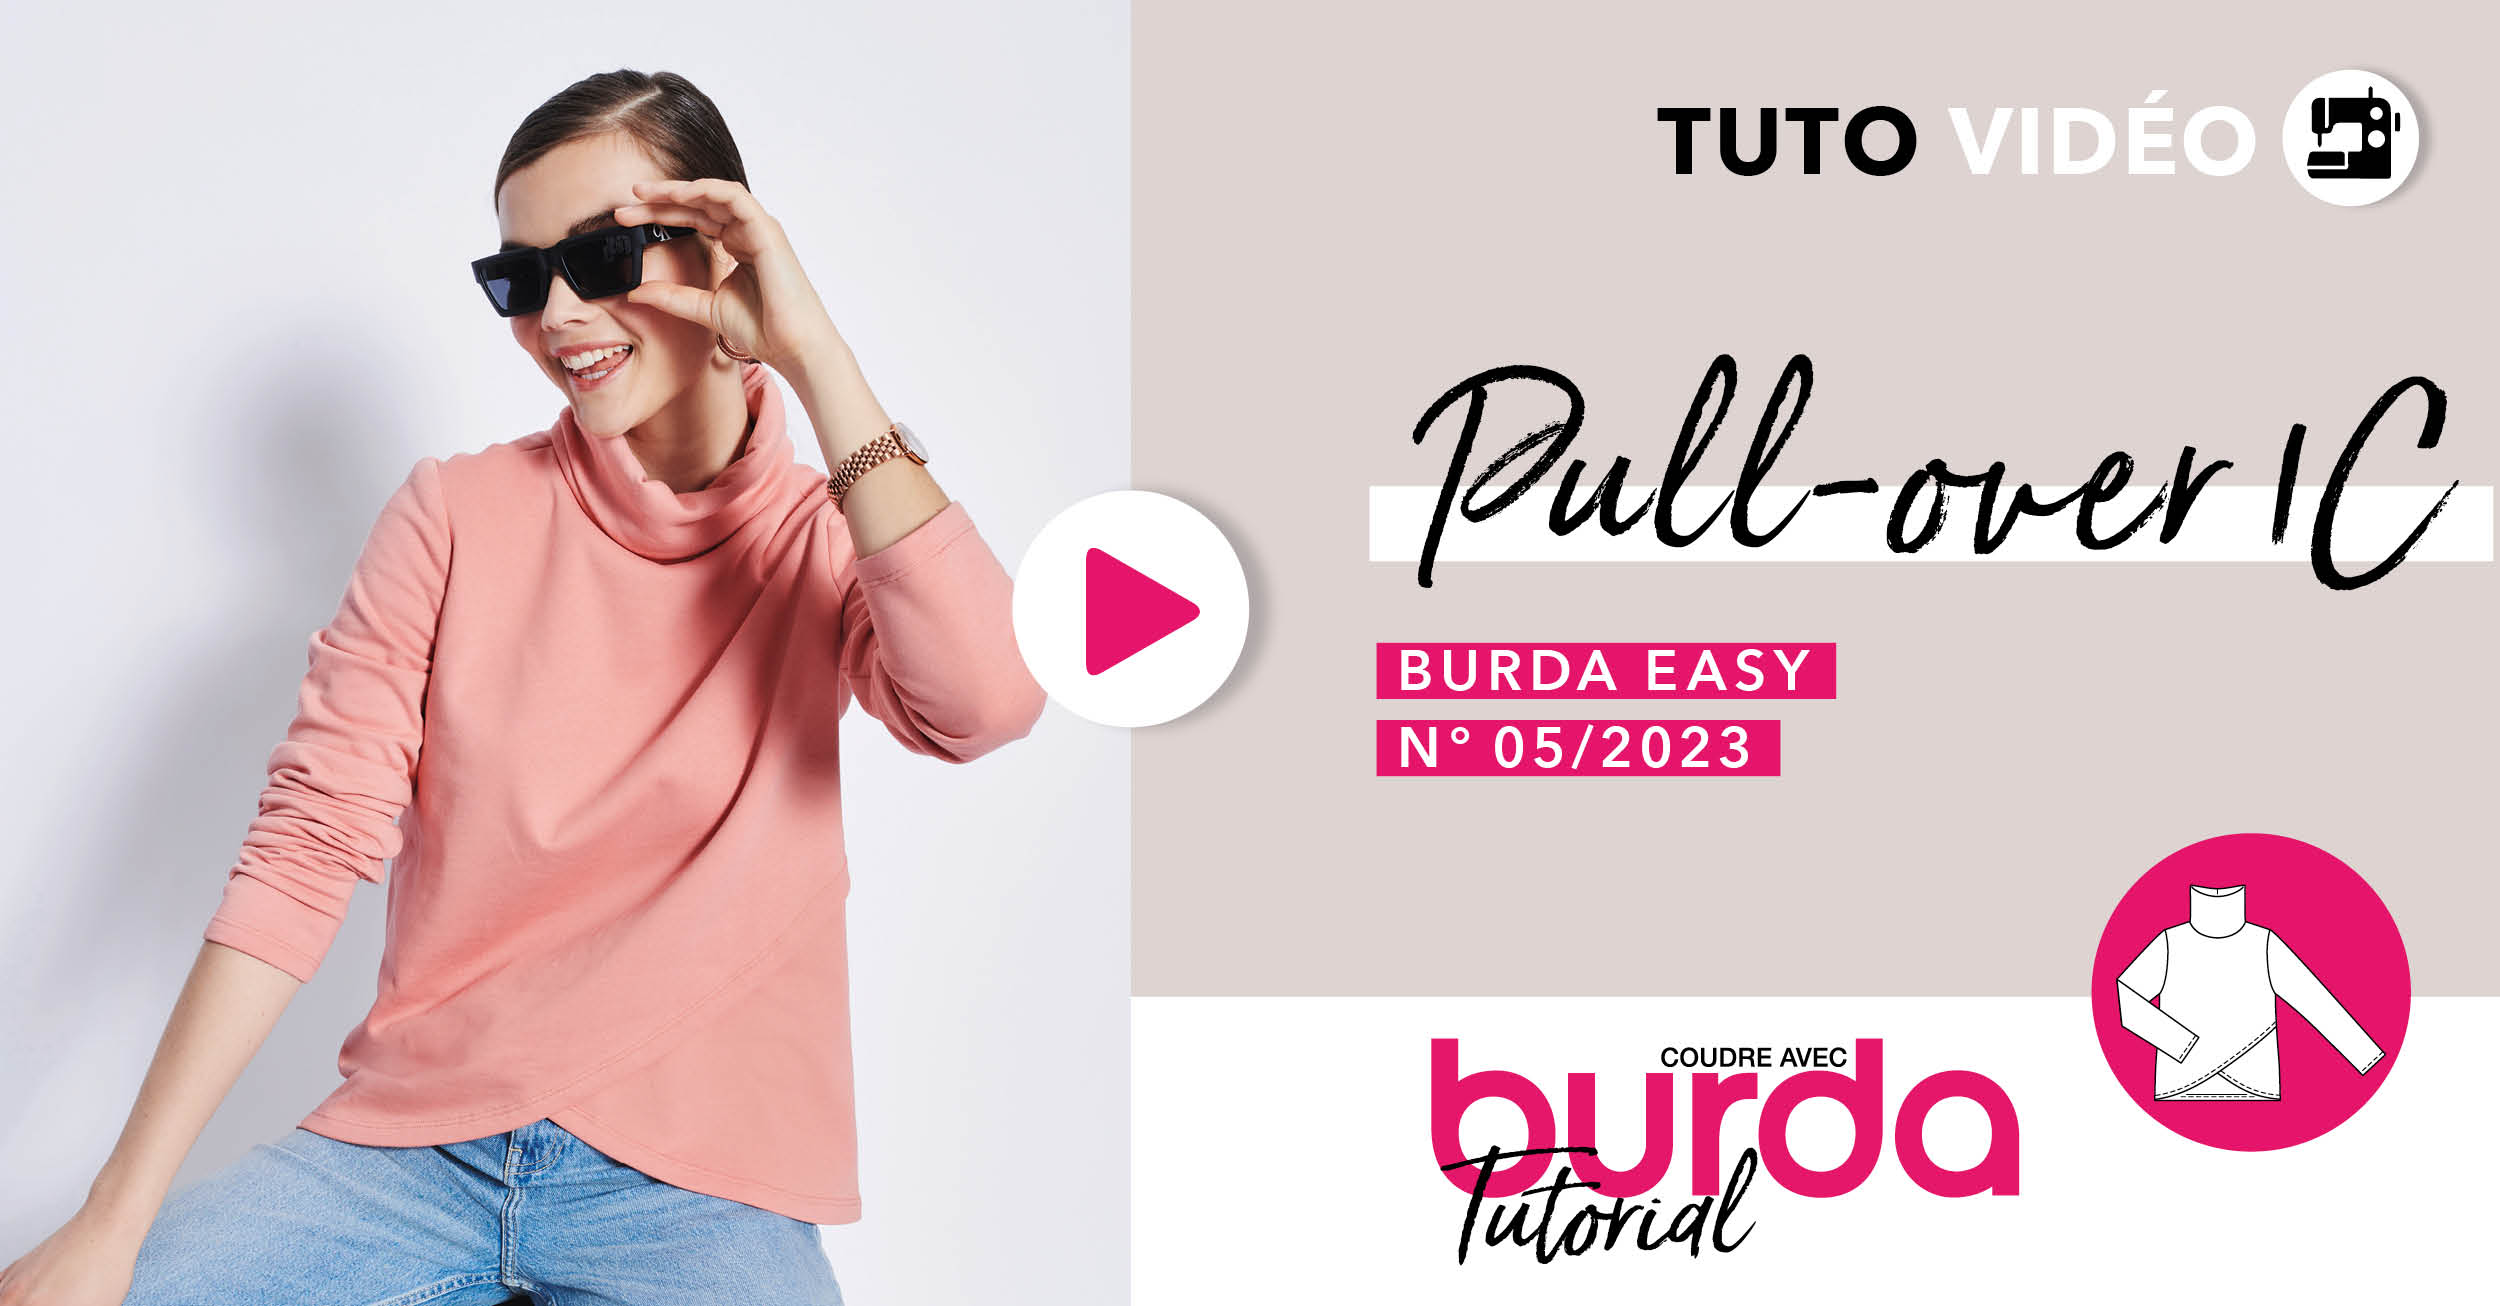 Tuto vidéo : Pull-over 5C - burda easy n°5 septembre/octobre 2023